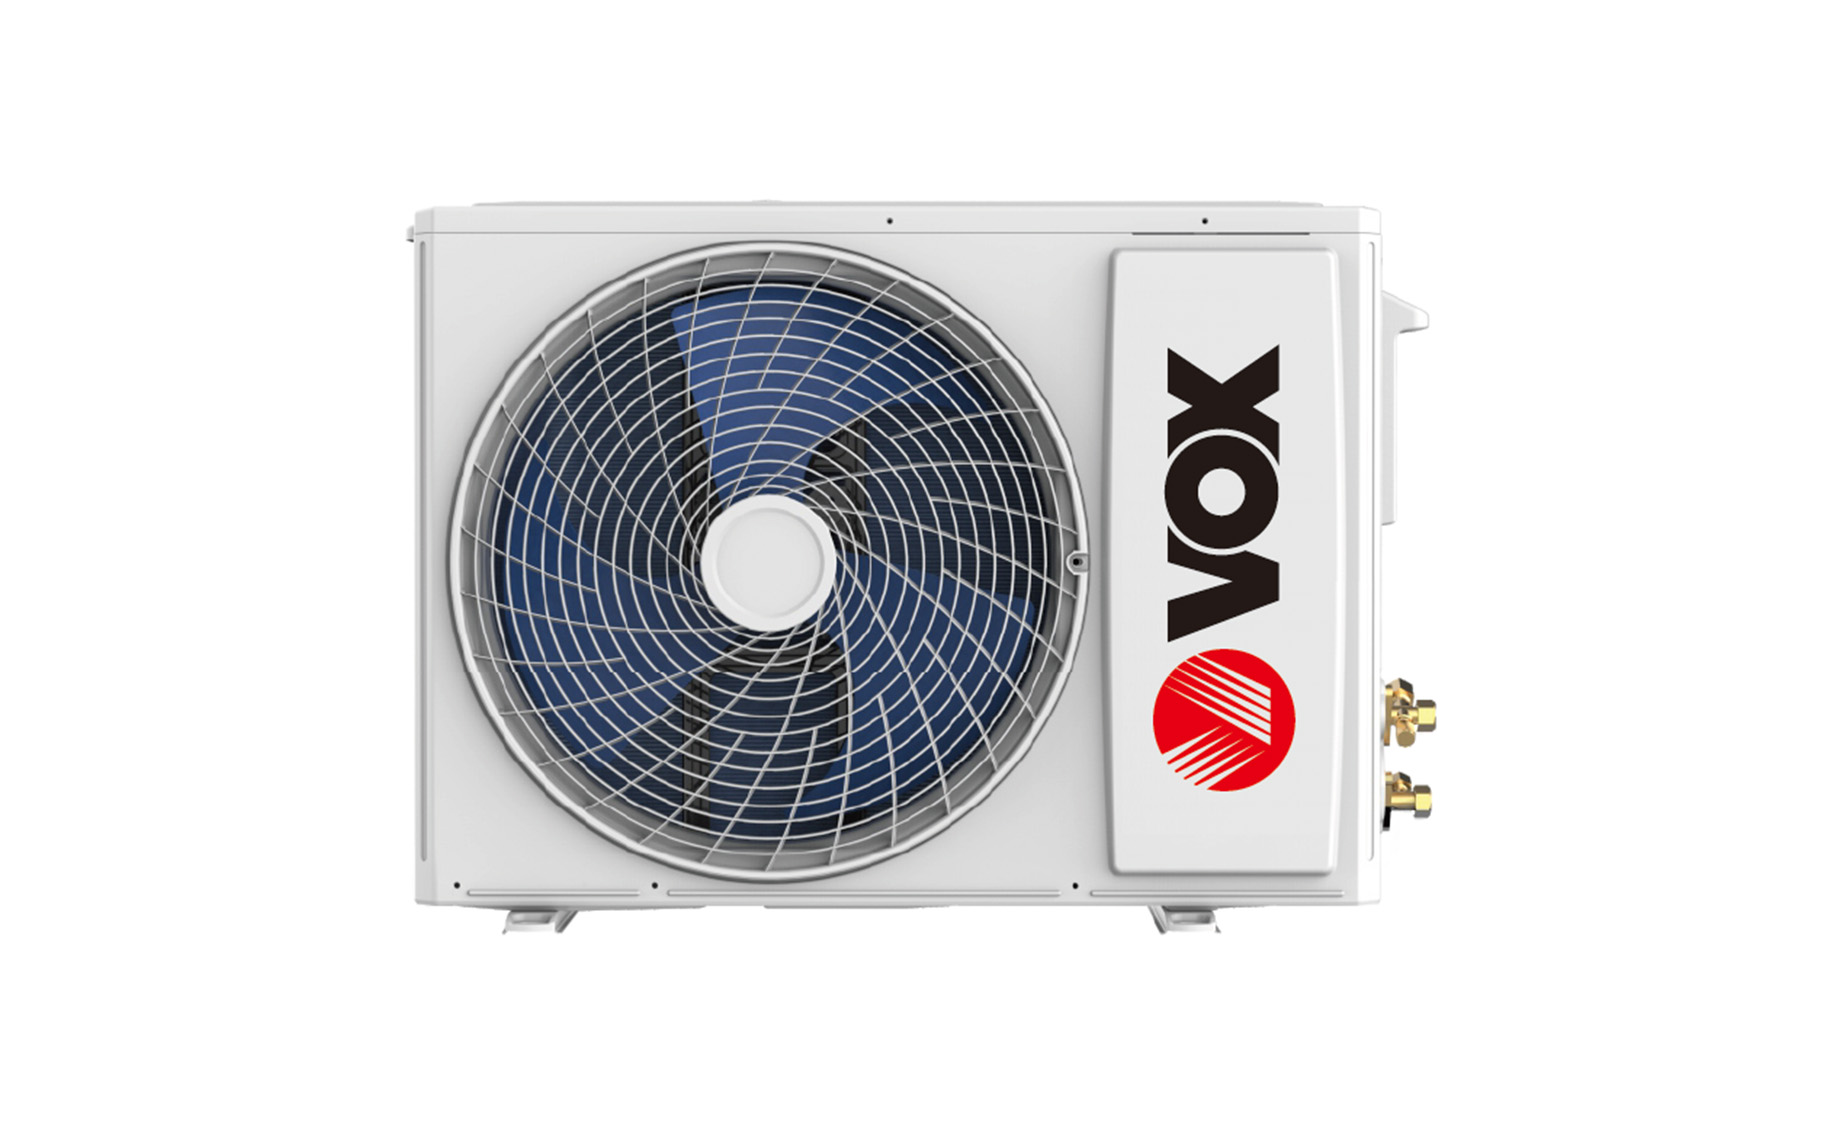 Vox IFG09AACT klima uređaj